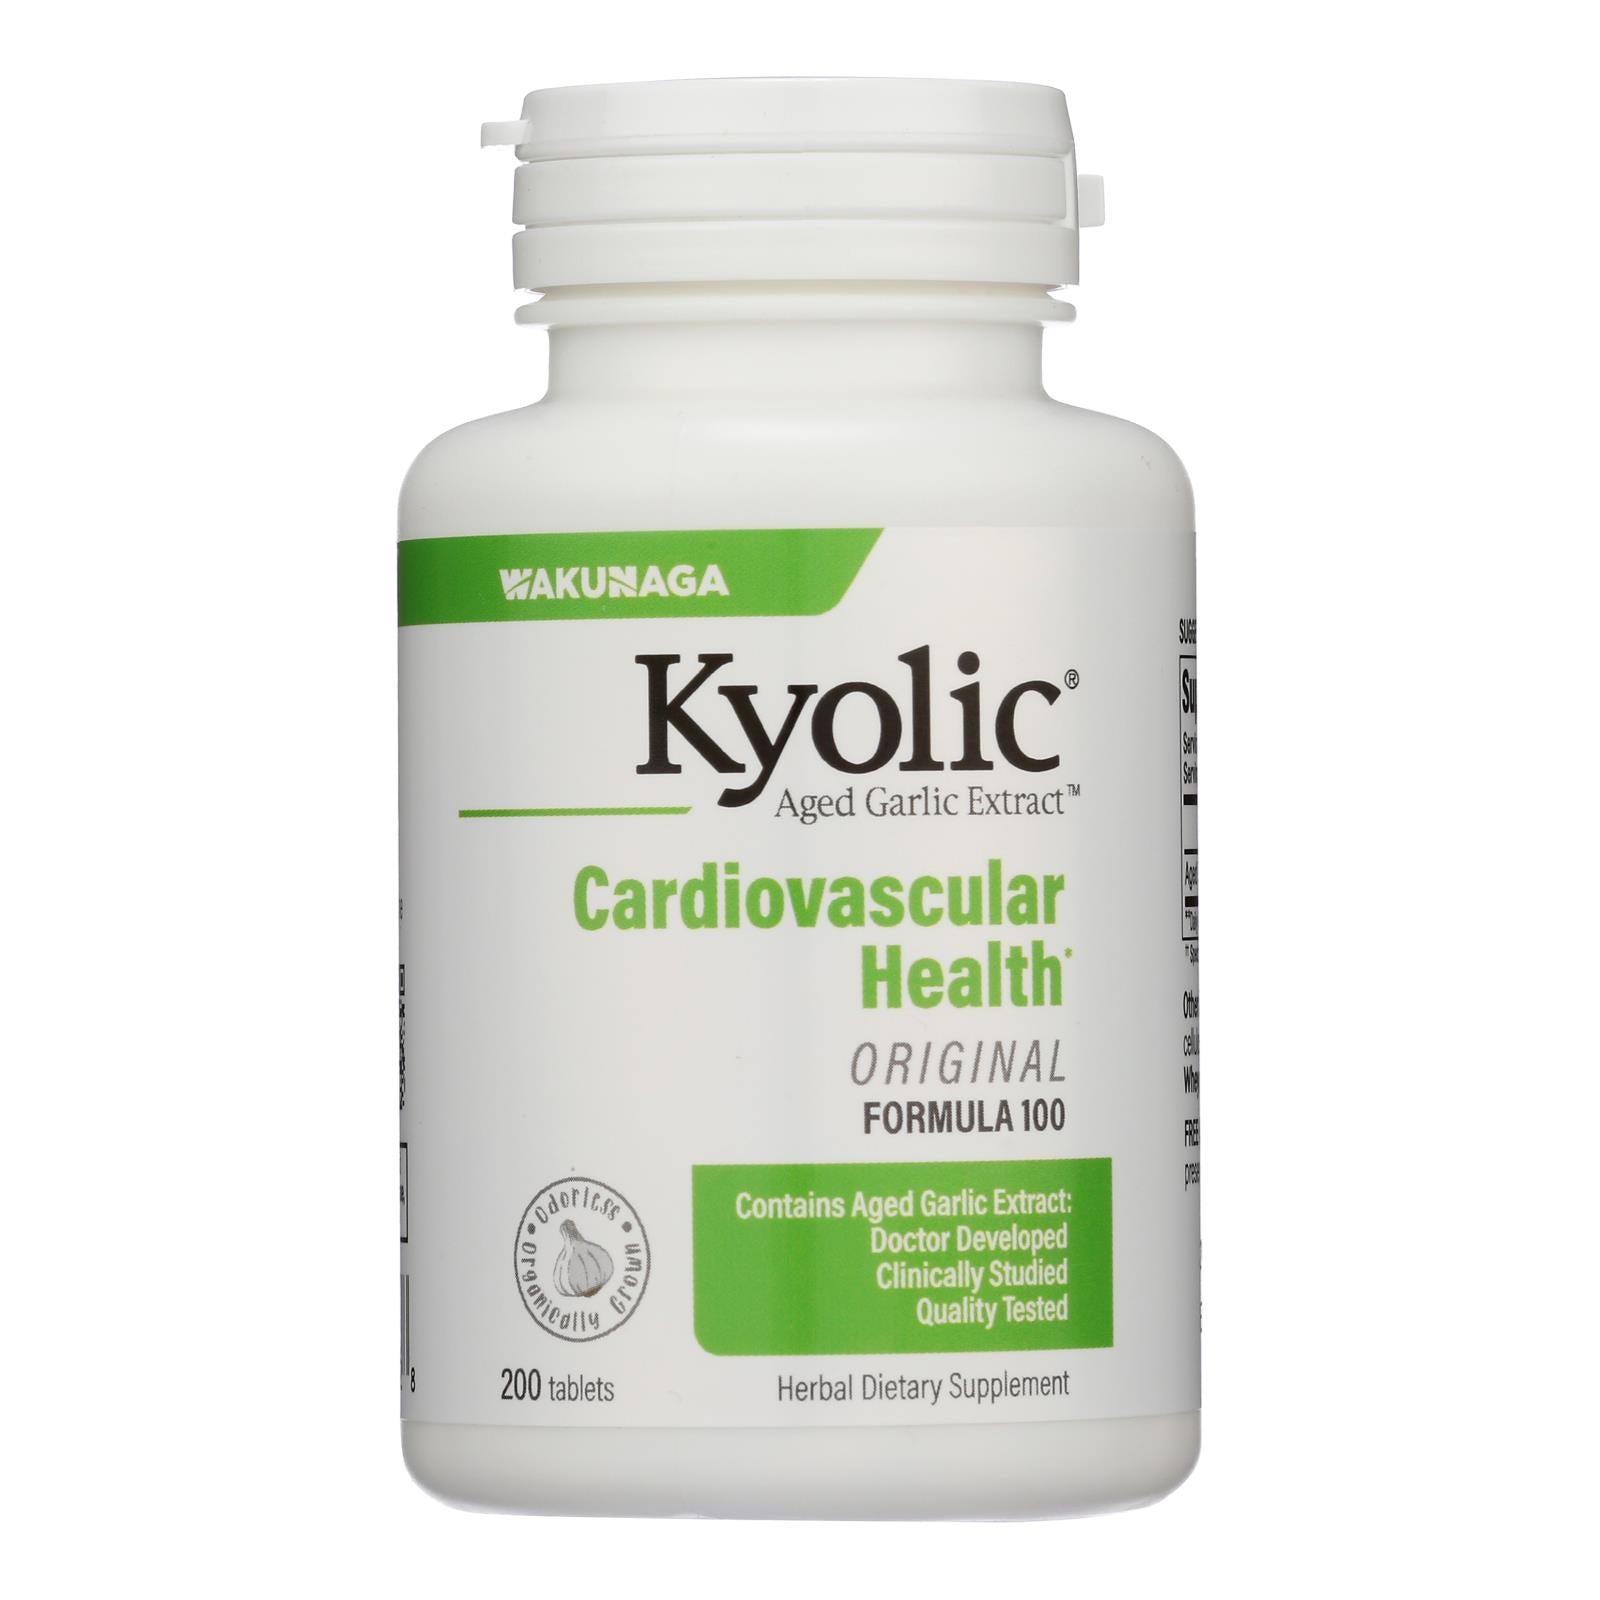 Kyolic - Aged Garlic Extract Hi-po Cardiovascular Original Formula 100 - 200 Tablets